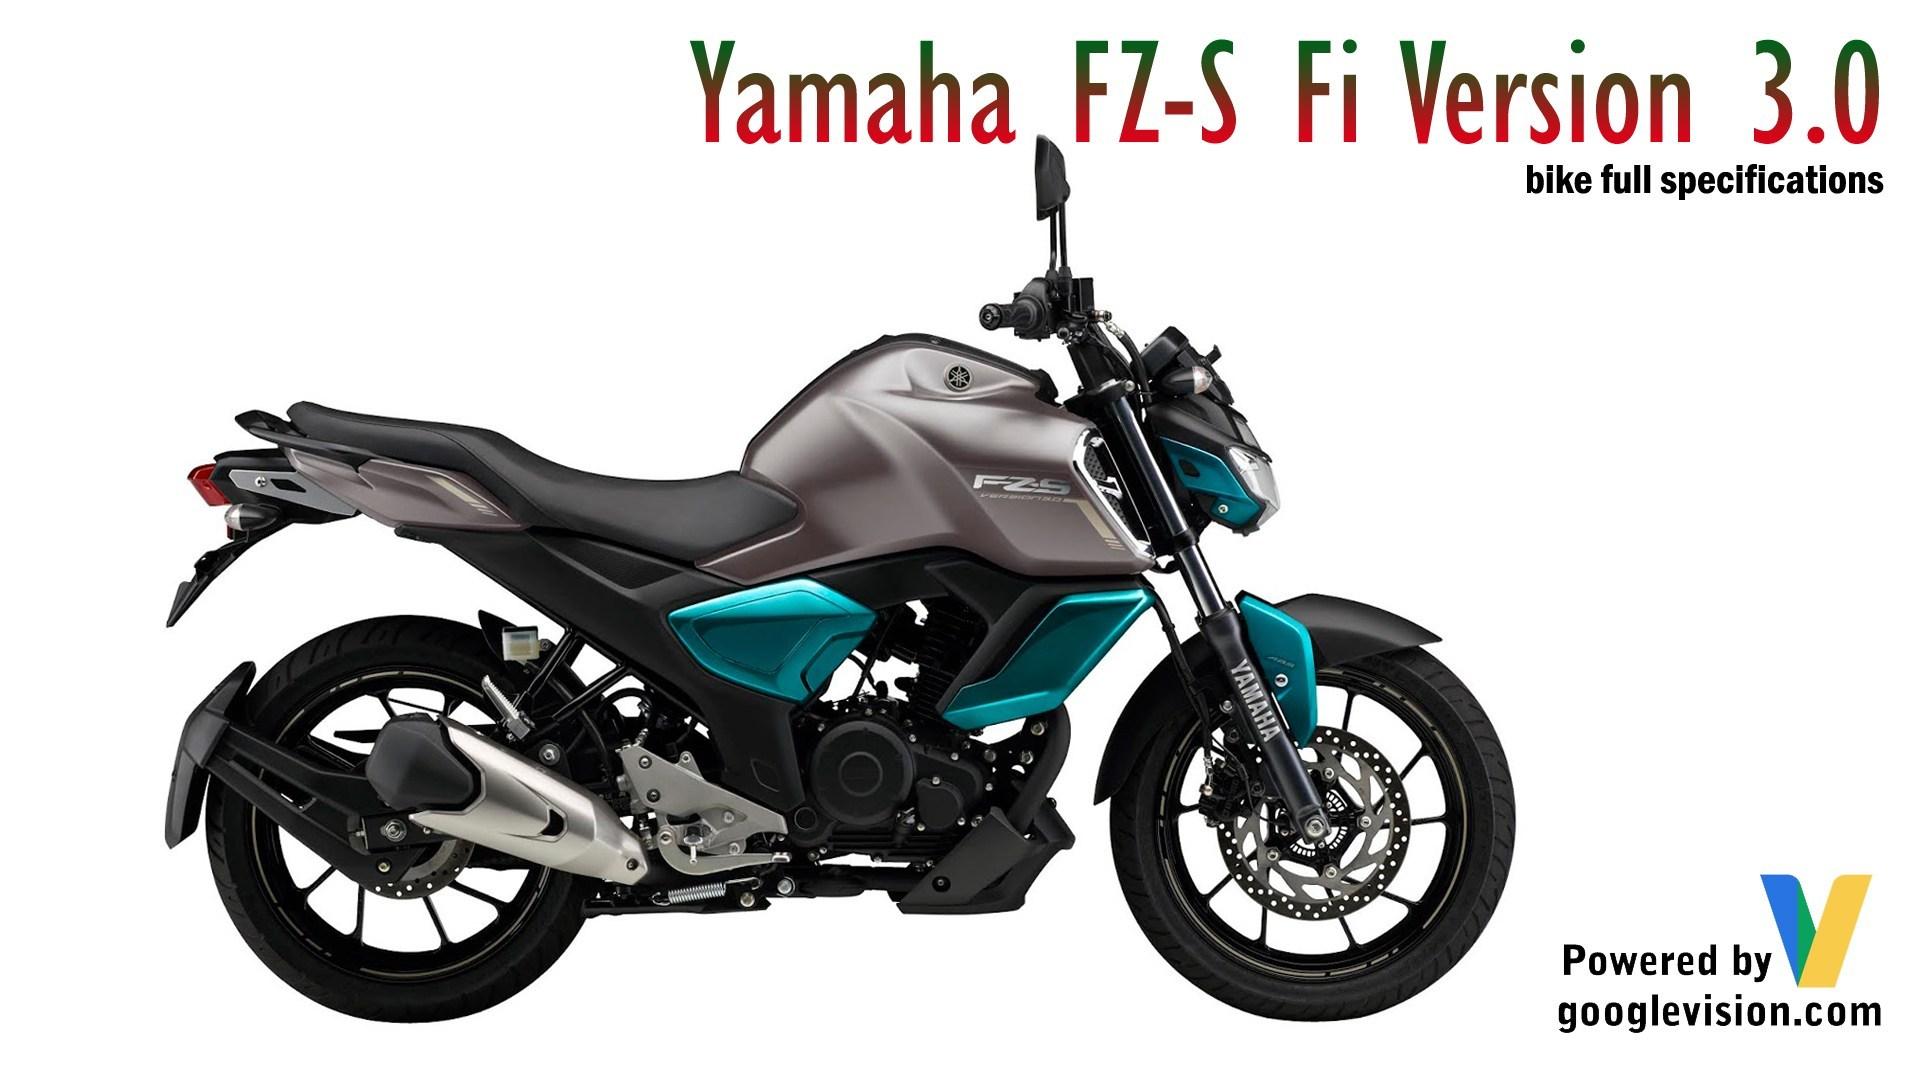 Yamaha FZ S Fi Version 3.0 Bike Specifications & Price